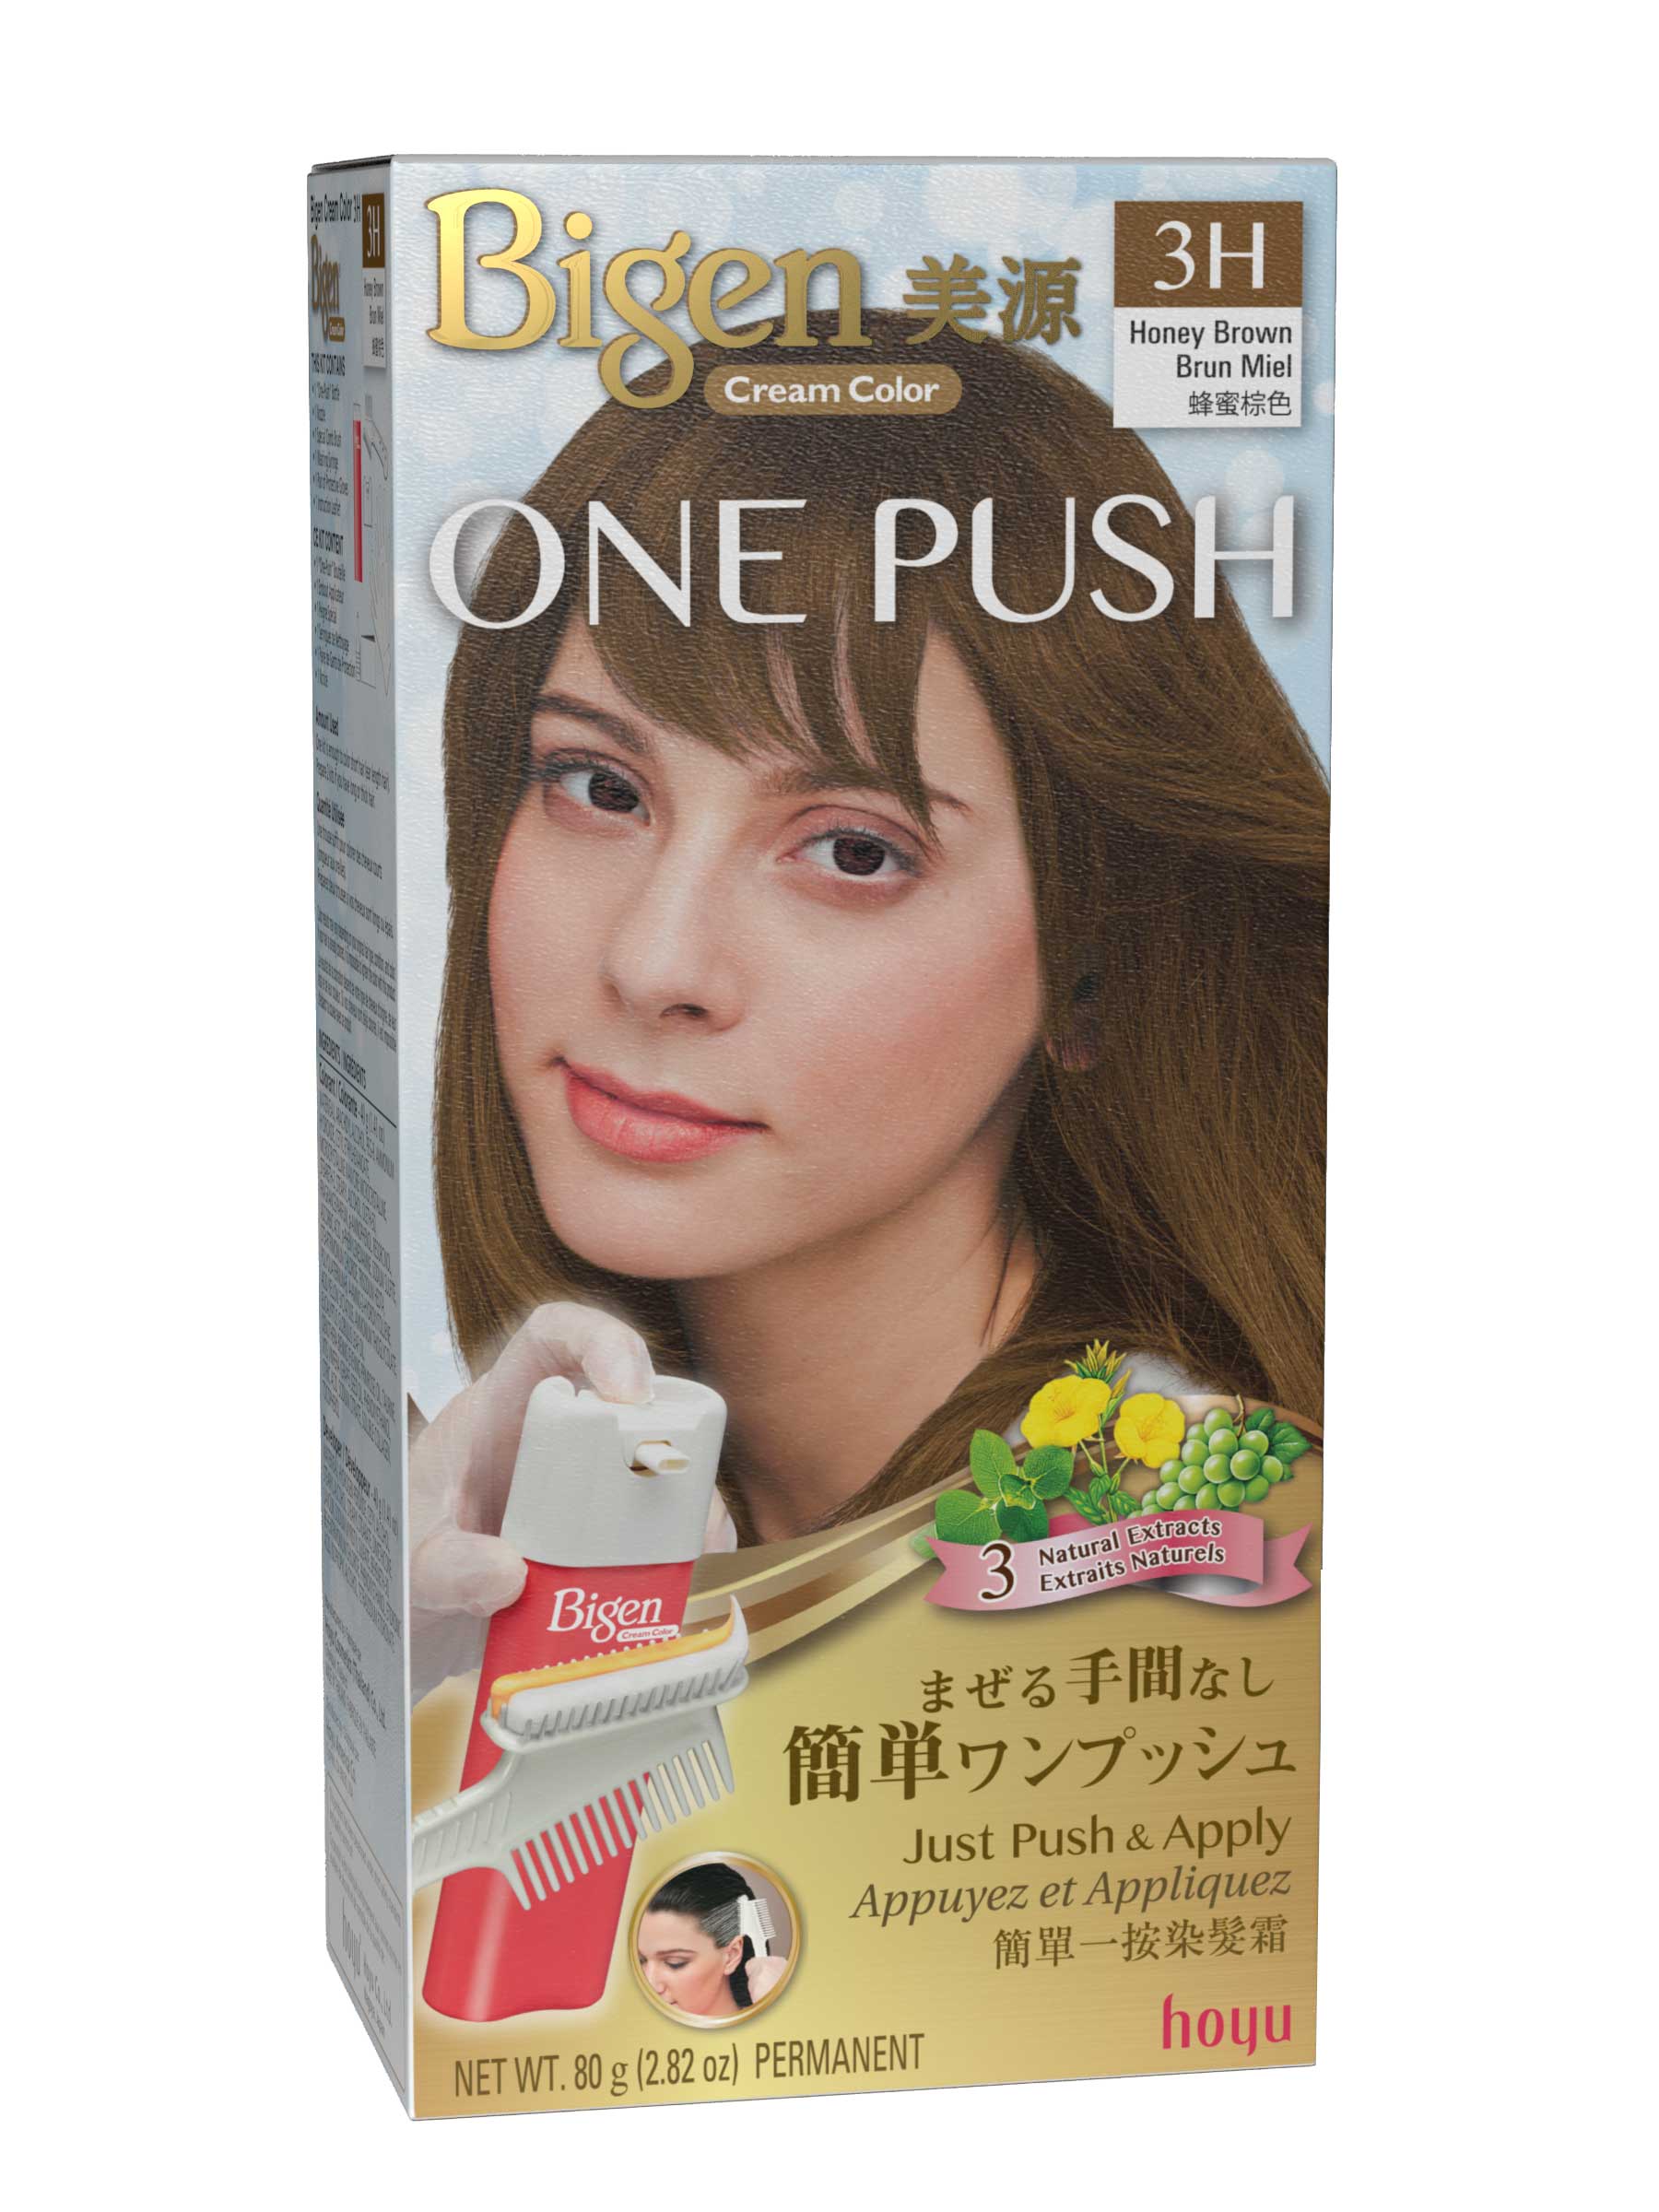 3H-One Push